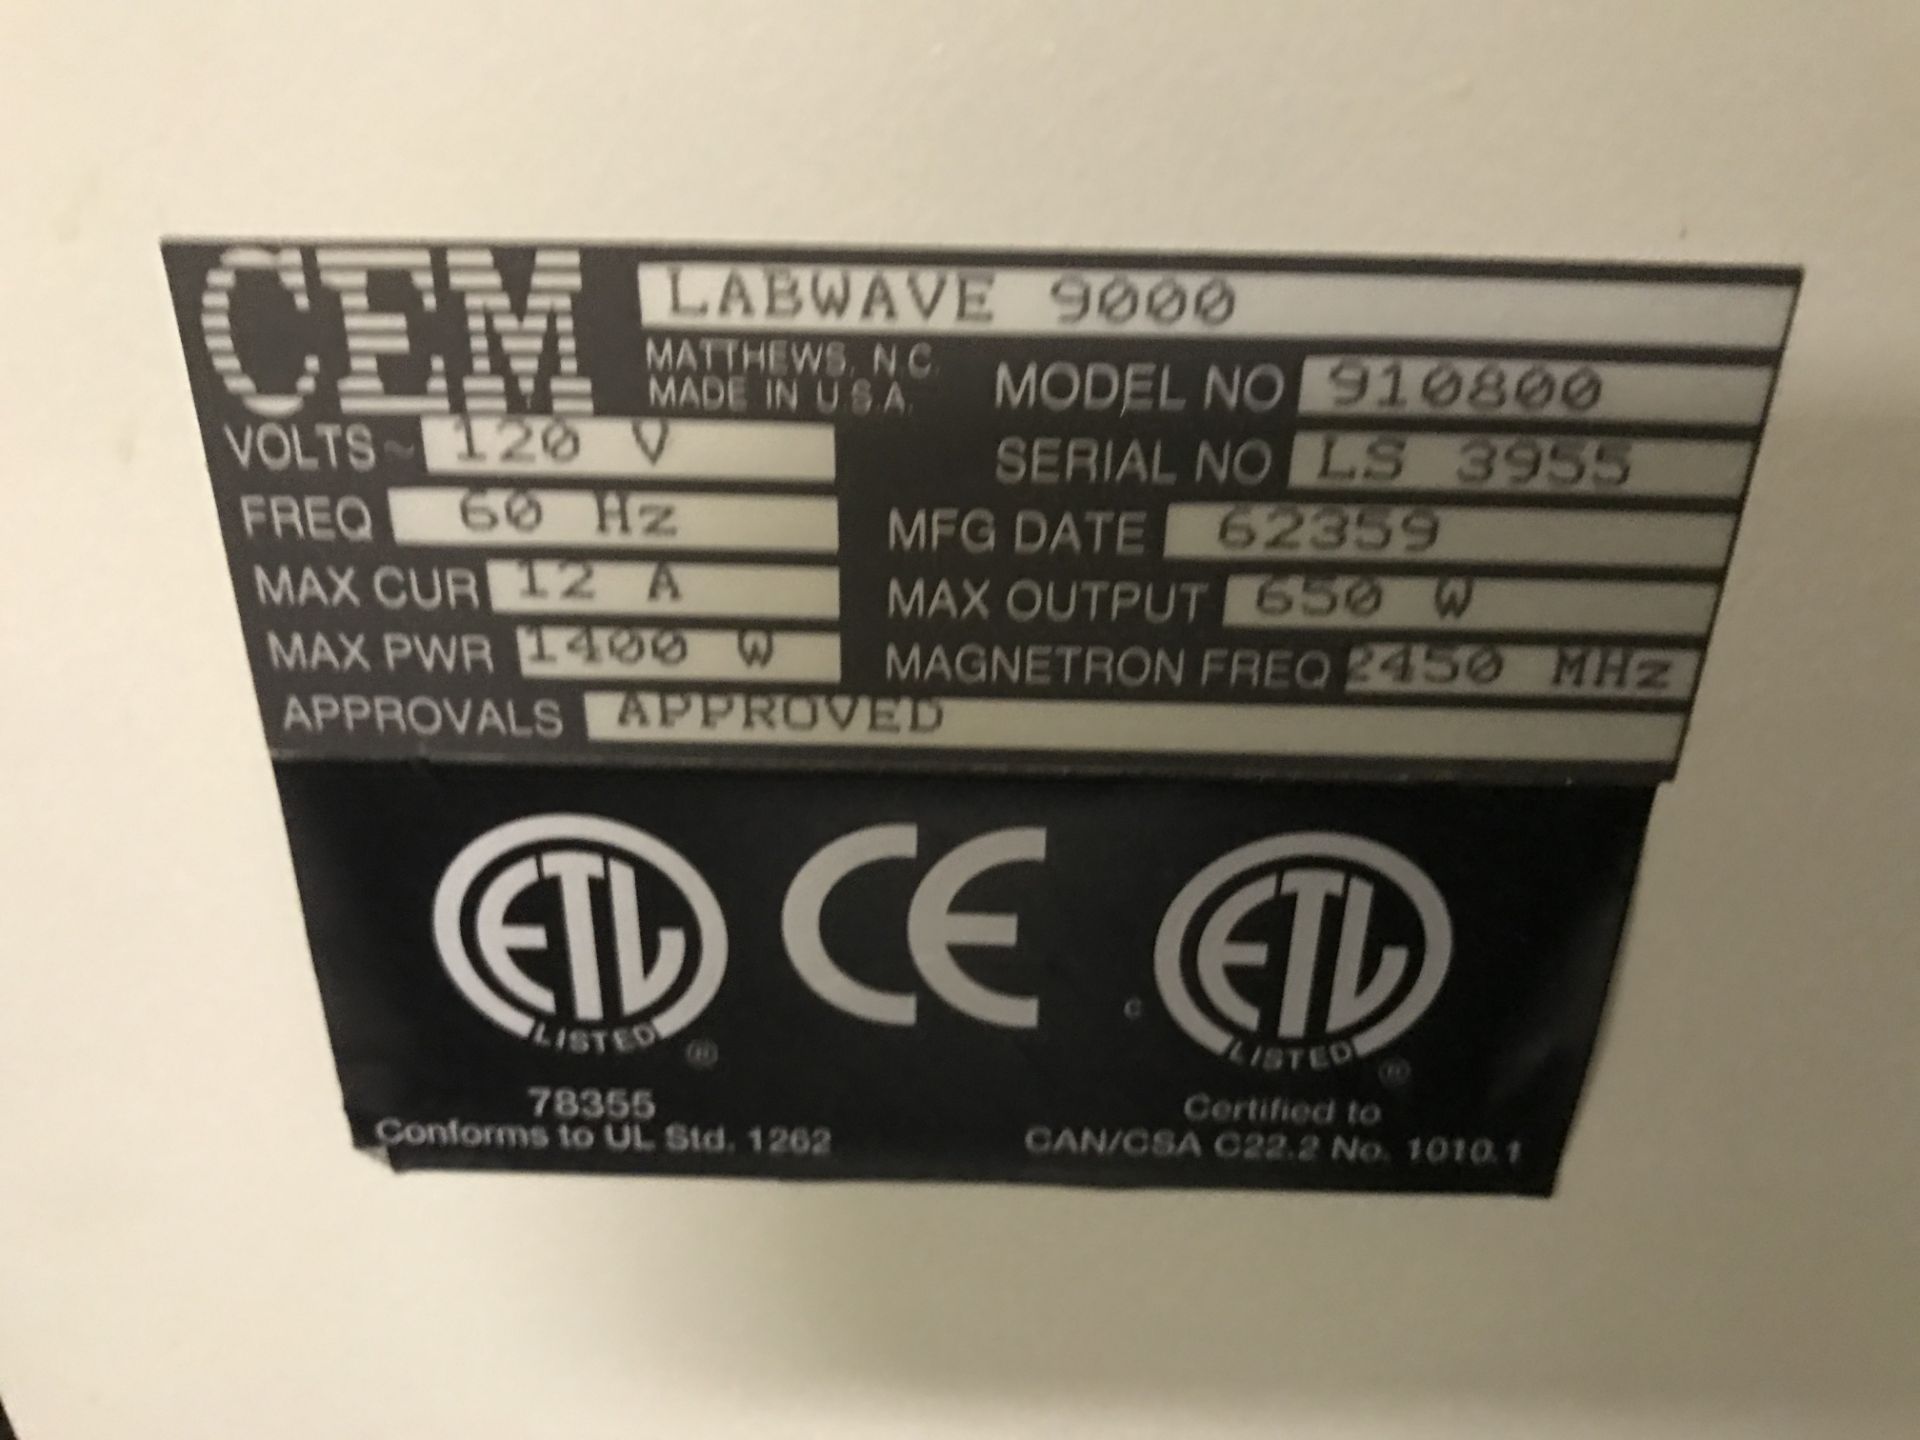 Microwave Moisture/Solids Analyzer , CEM Labwave 9000 model 910800 - Image 2 of 2